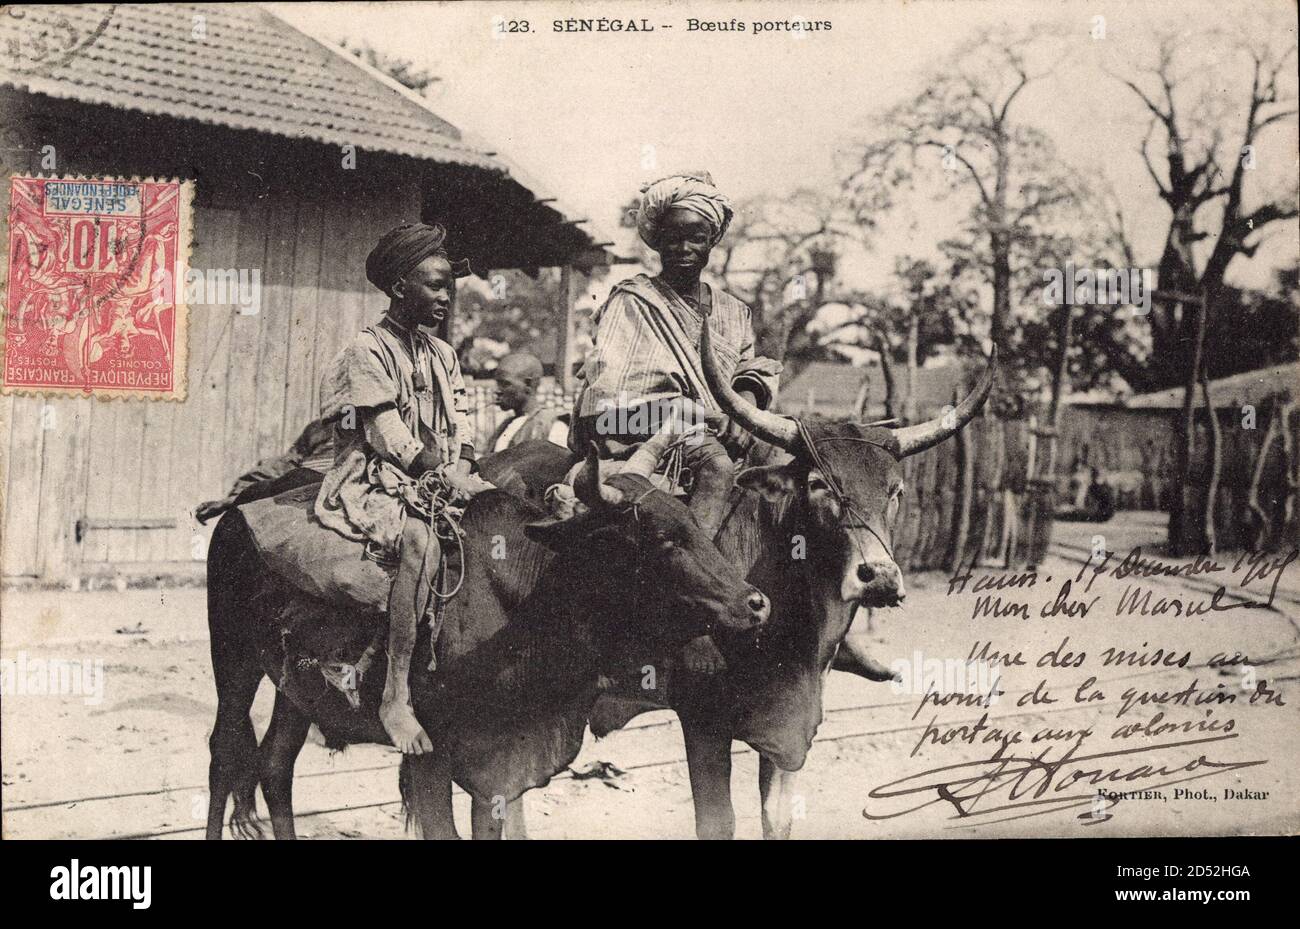 Senegal Westafrika, Boeufs porteurs, Anwohner auf Rindern | utilizzo in tutto il mondo Foto Stock